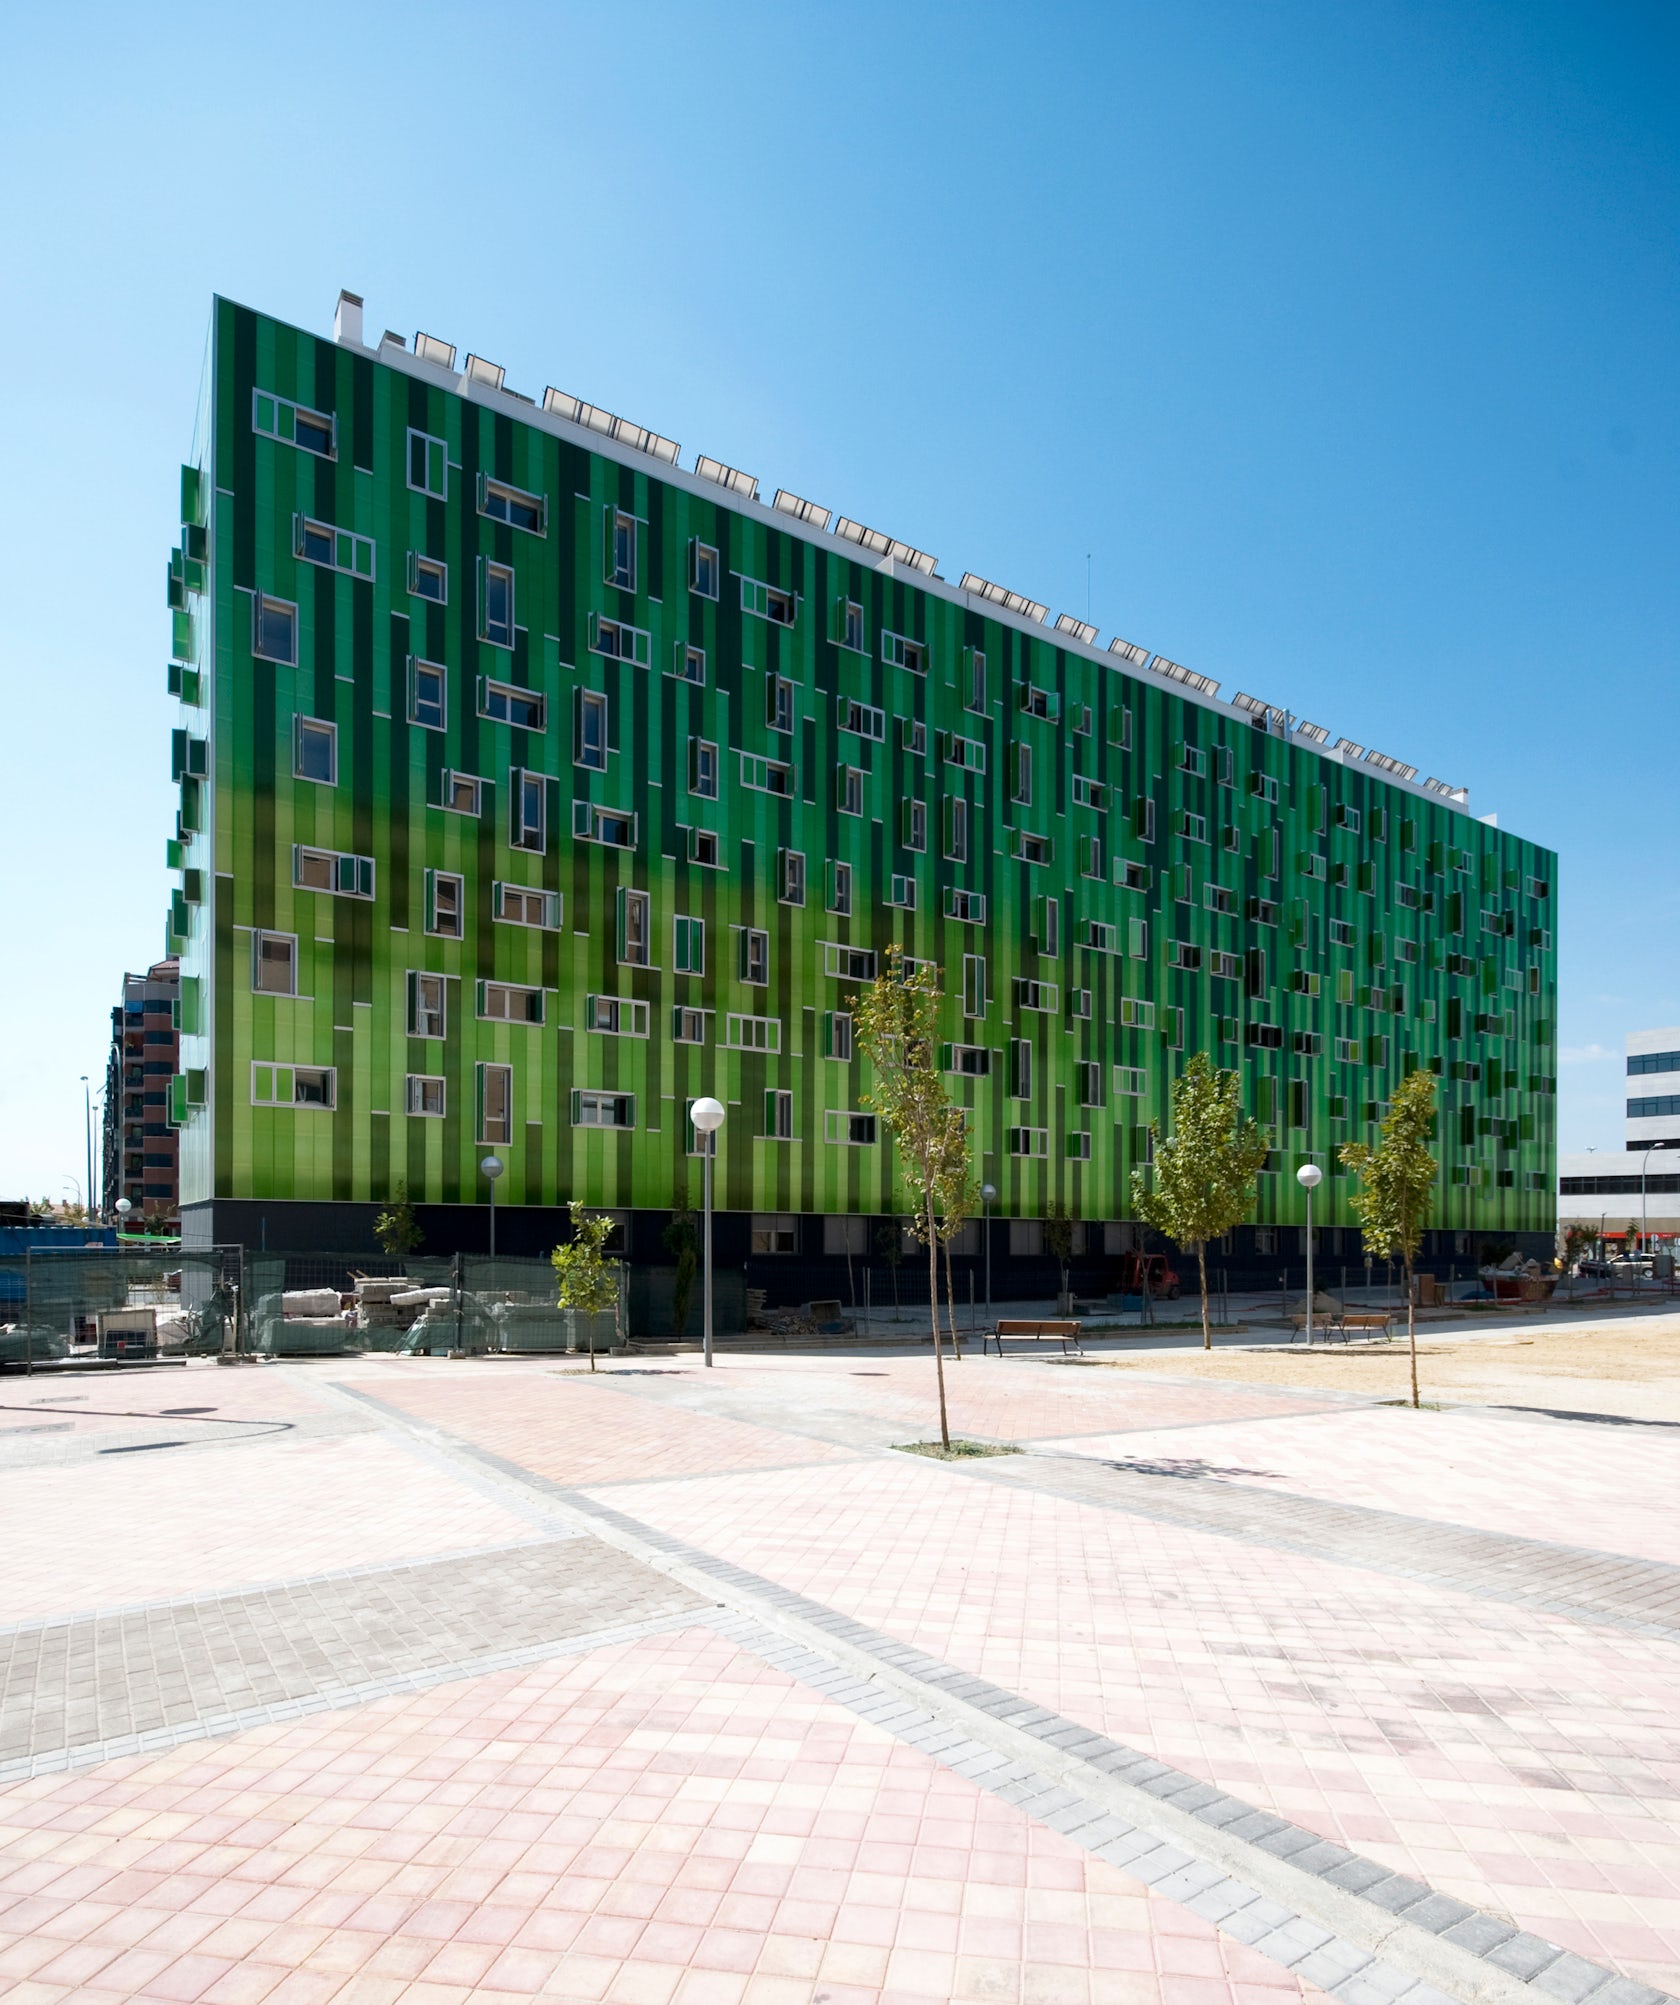 green colour building